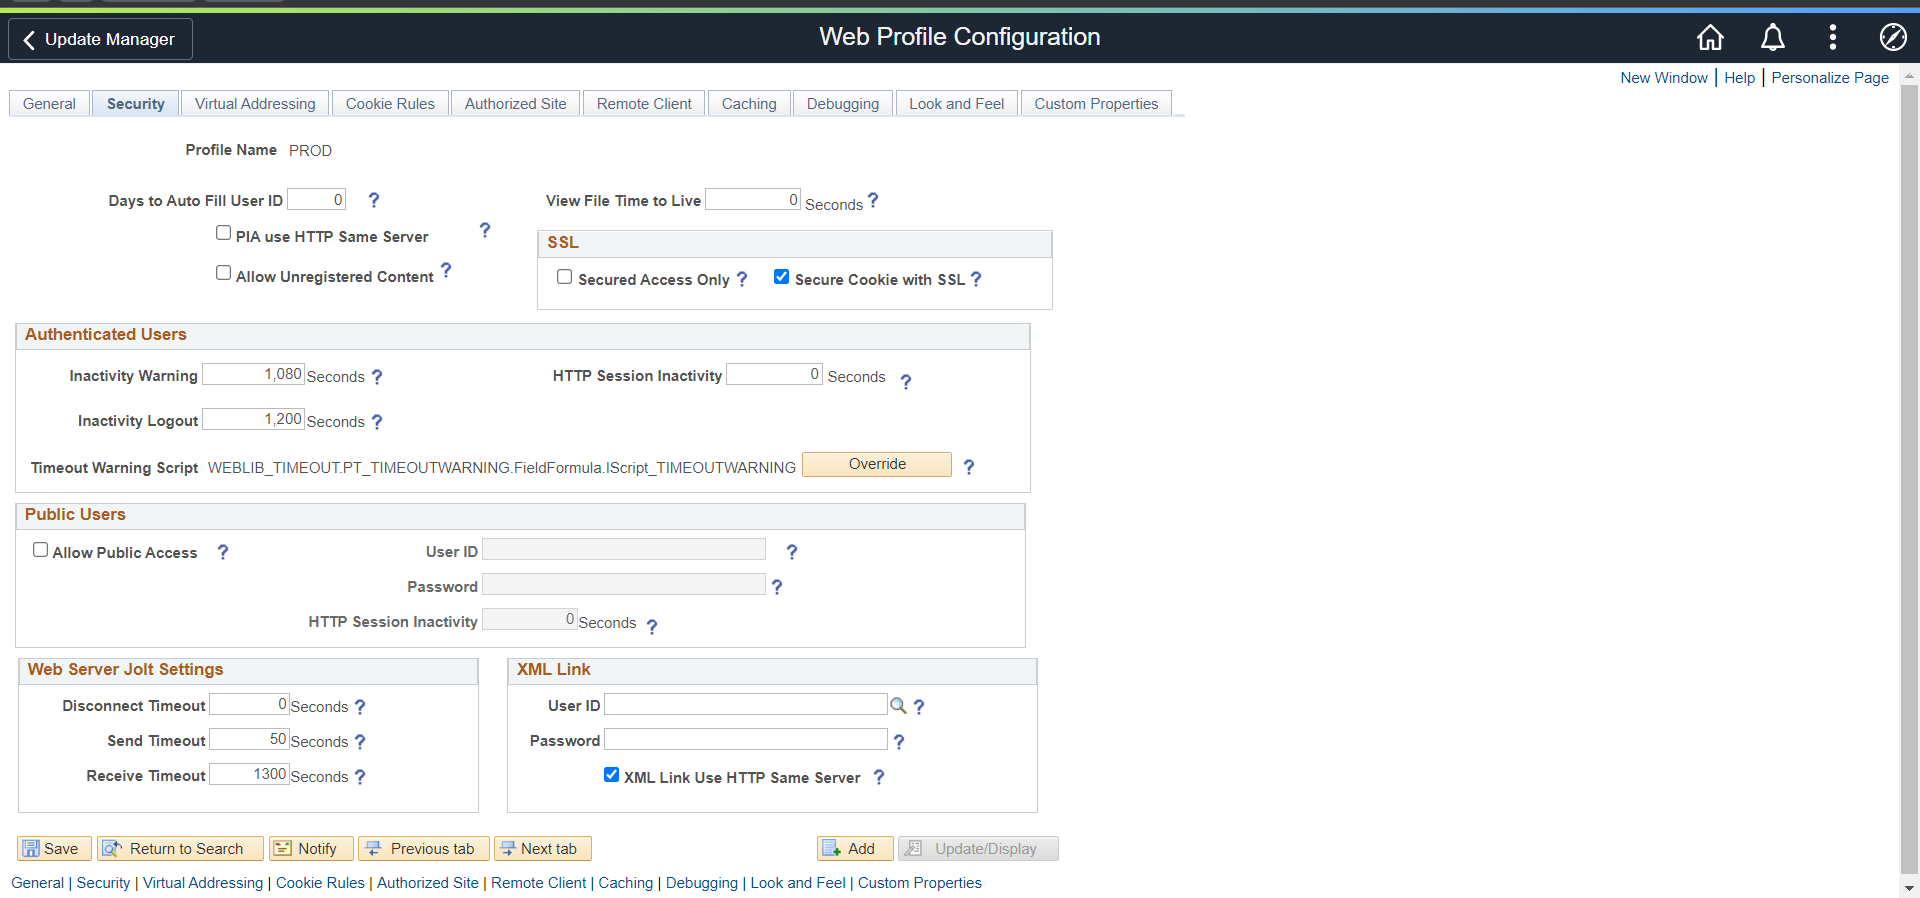 PeopleSoft SSO (Single Sign-On): Web Profile Configuration